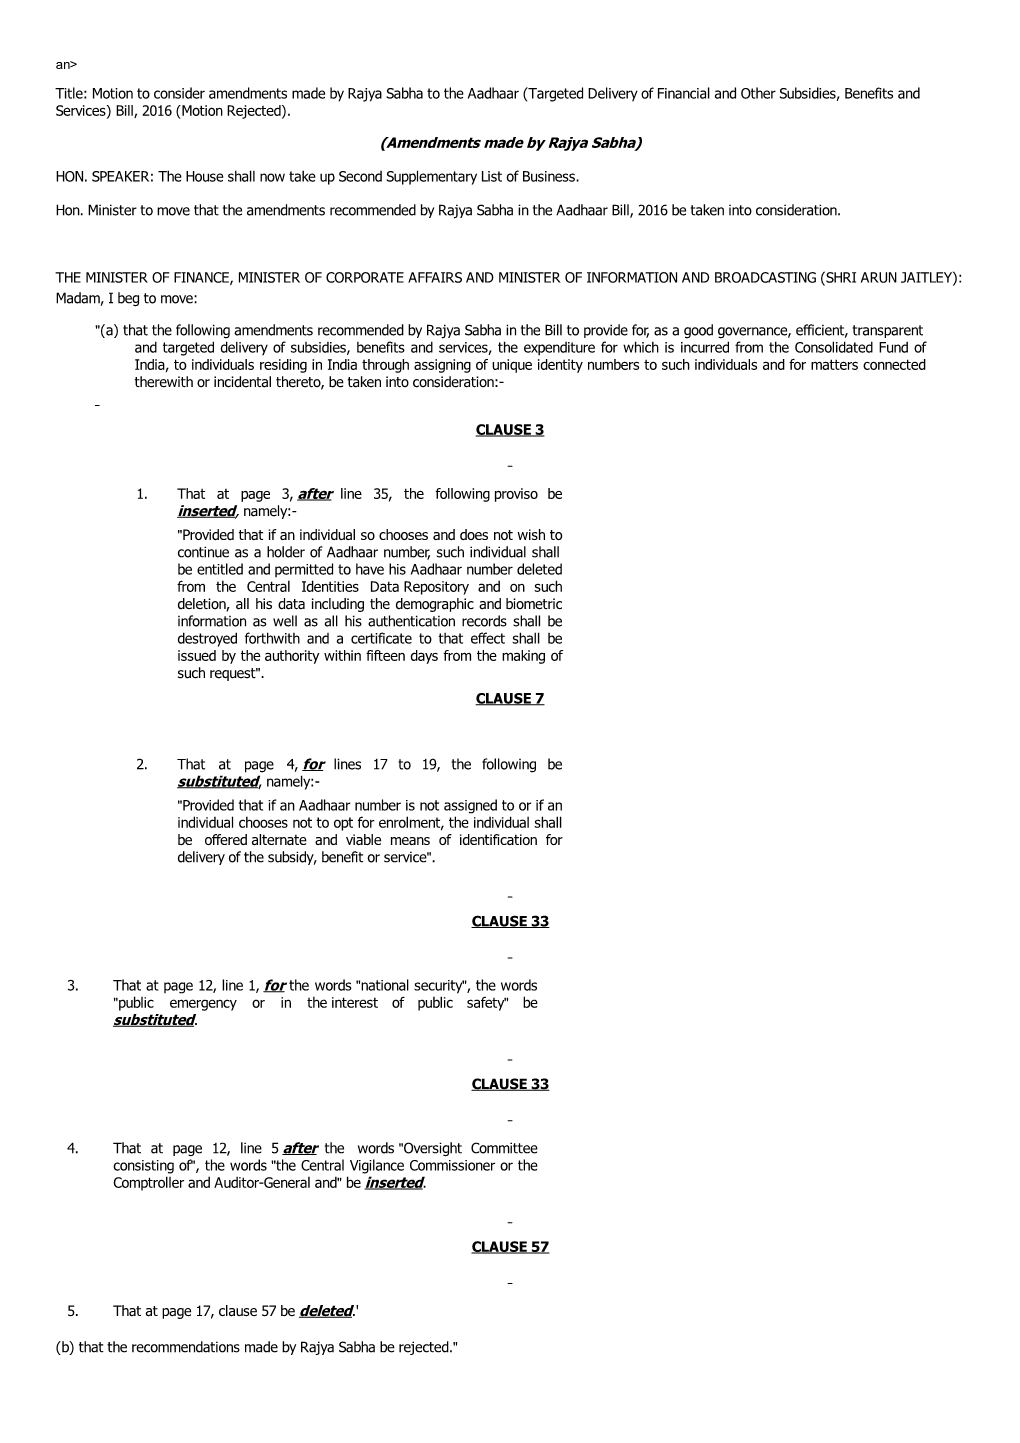 Motion to Consider Amendments Made by Rajya Sabha to the Aadhaar